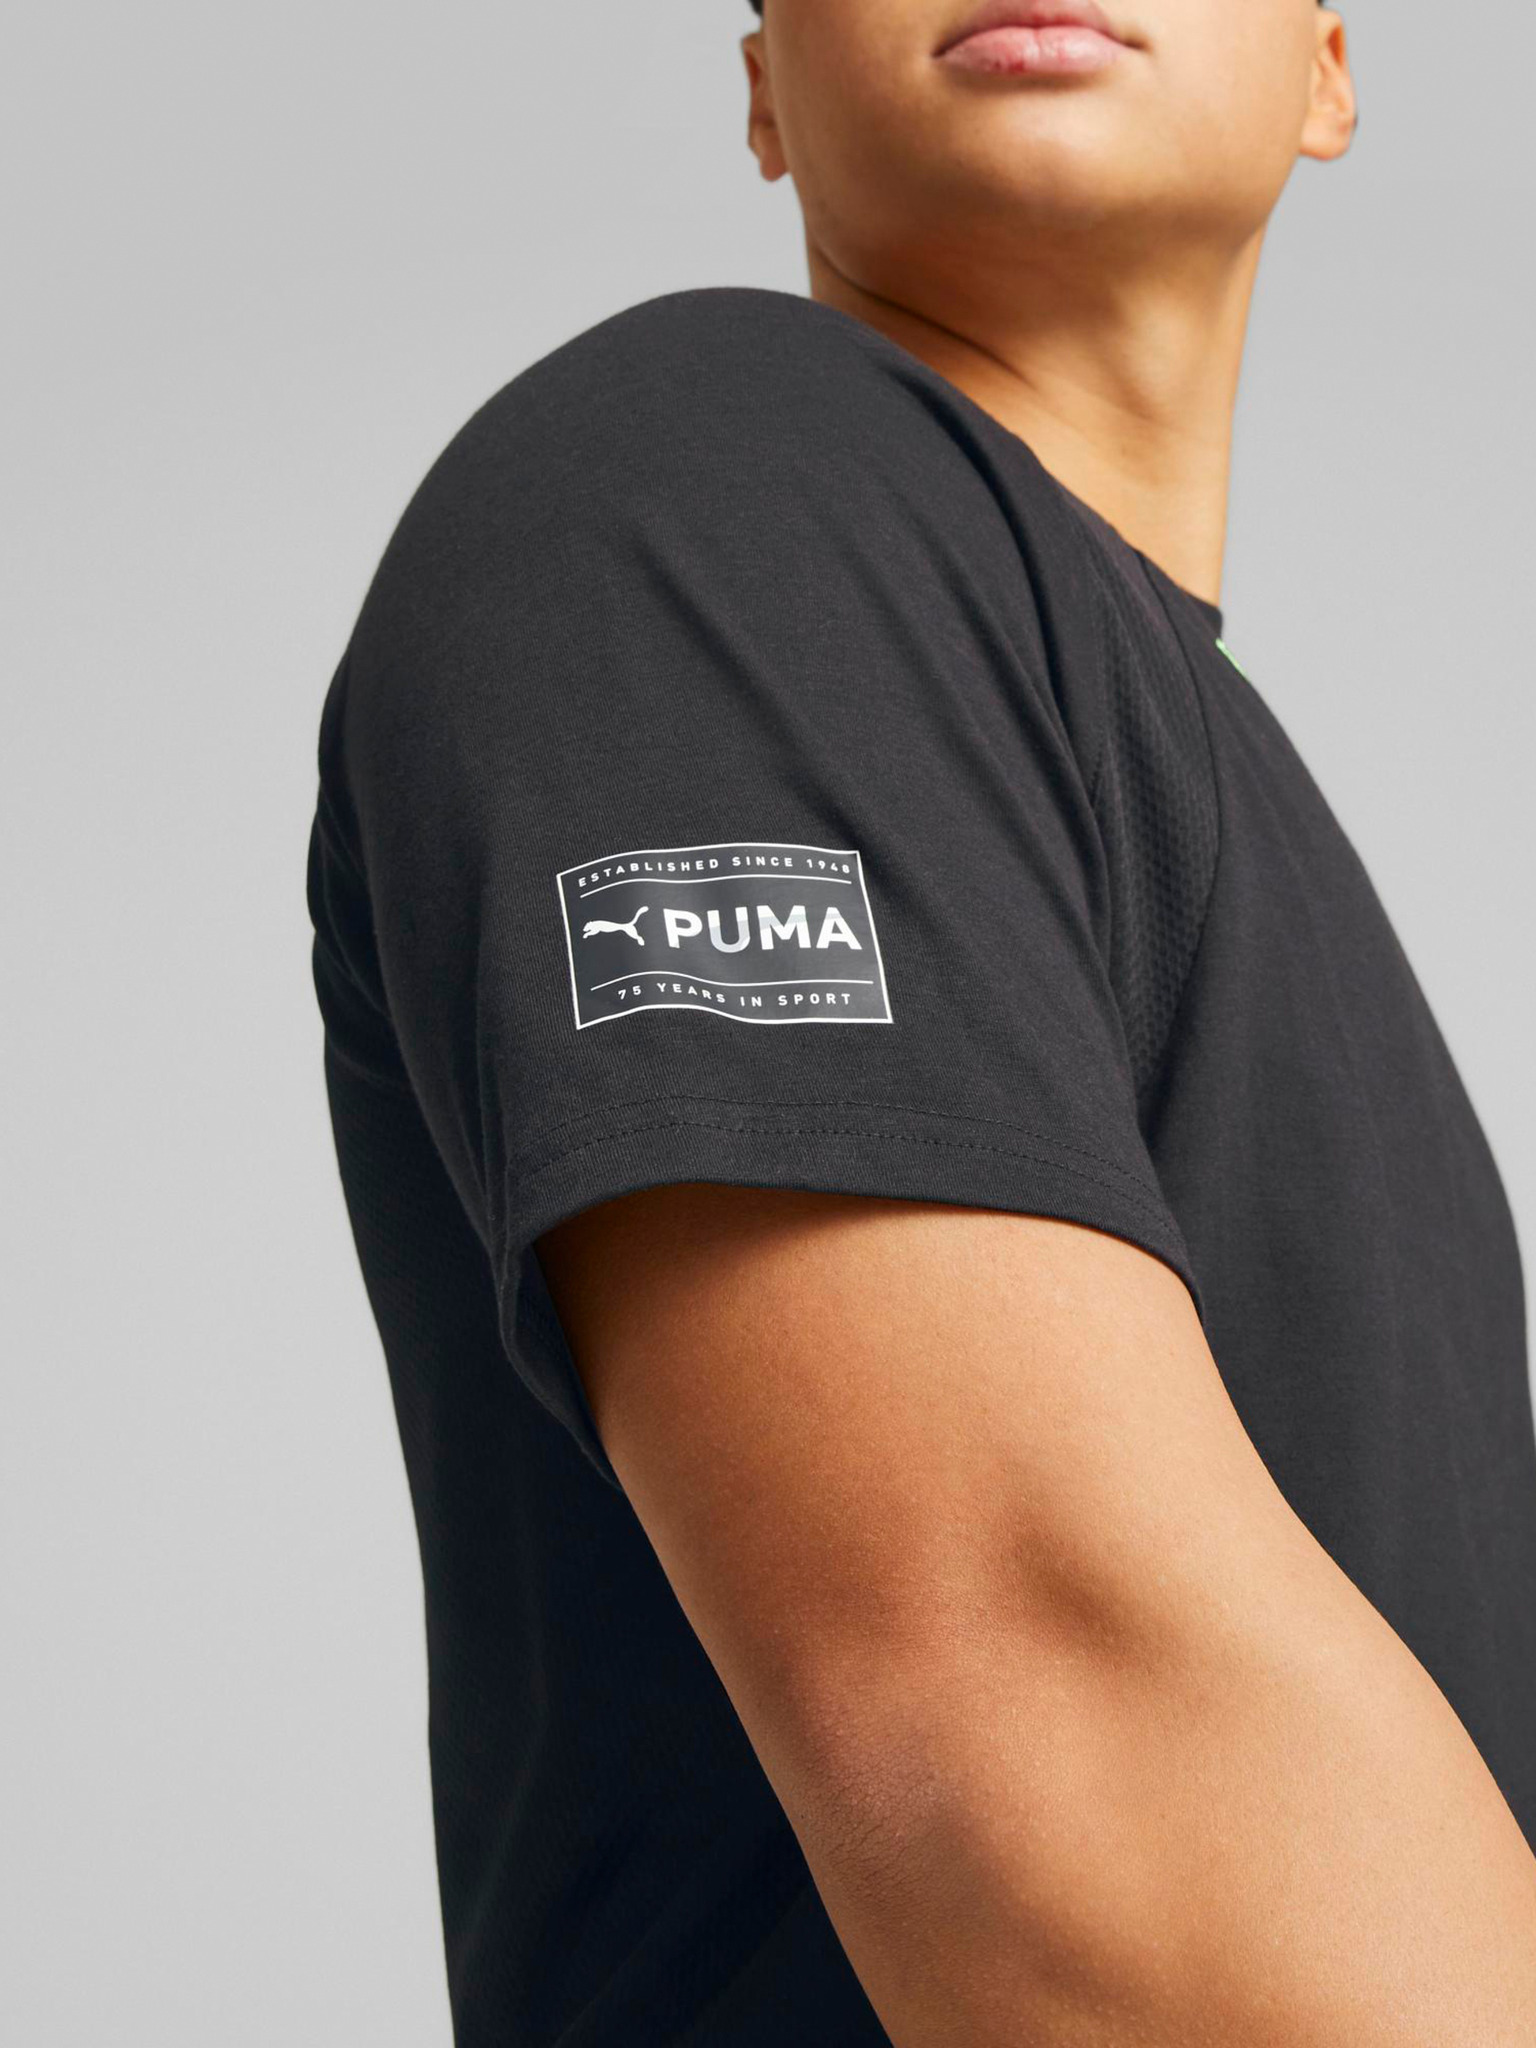 Puma - Fit Ultrabreathe T-shirt Triblend